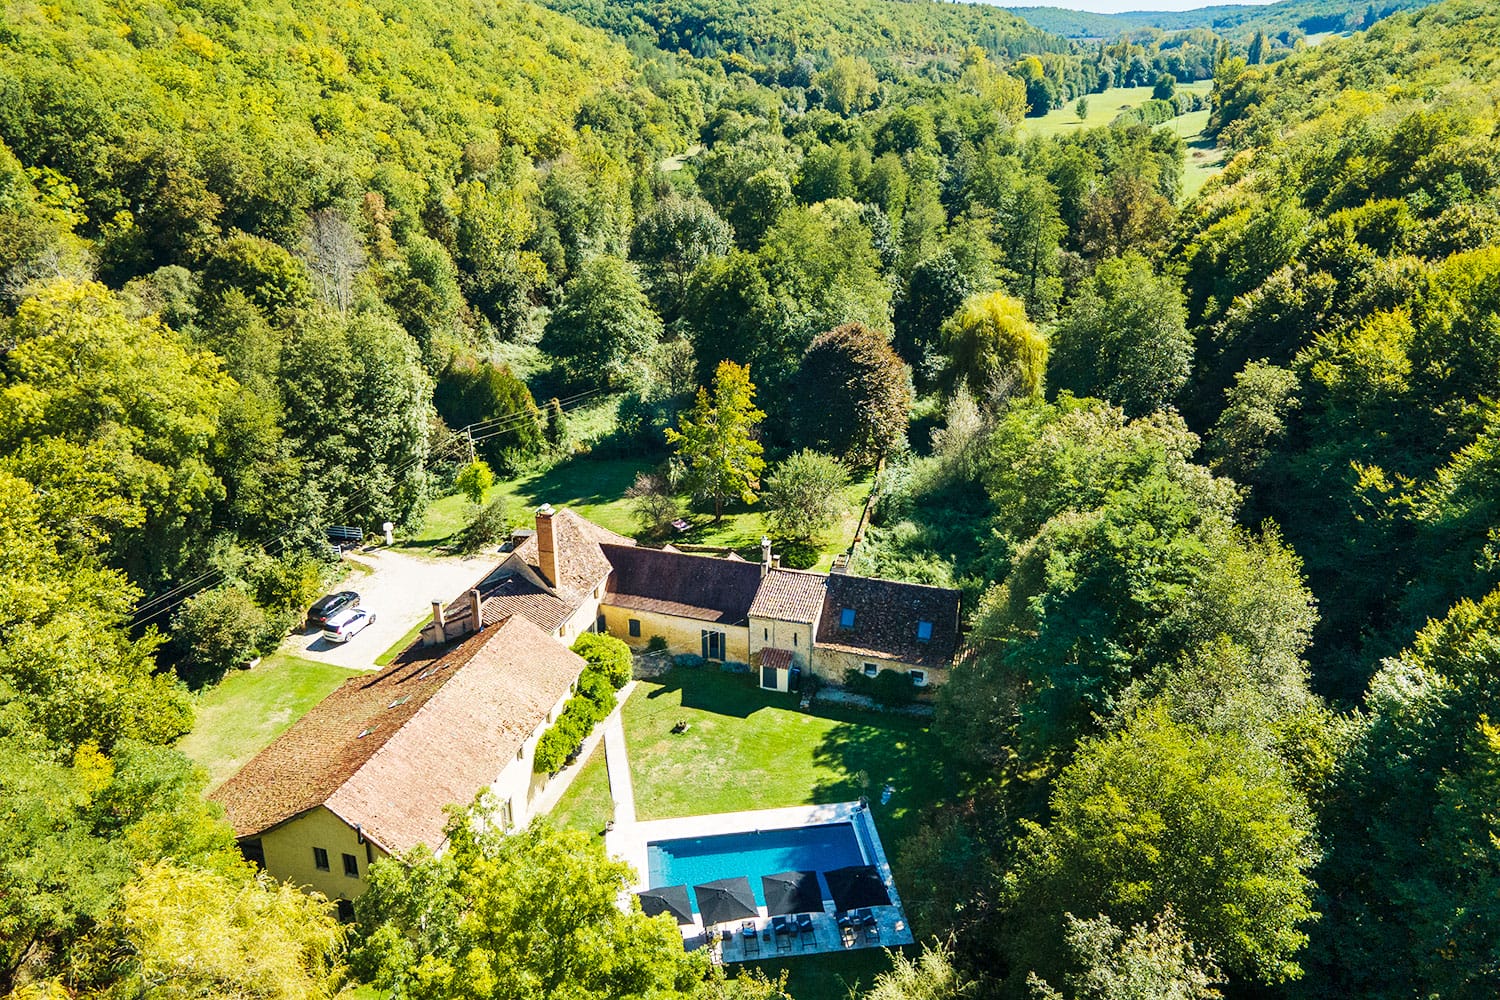 Luxury Gite in the Dordogne countryside